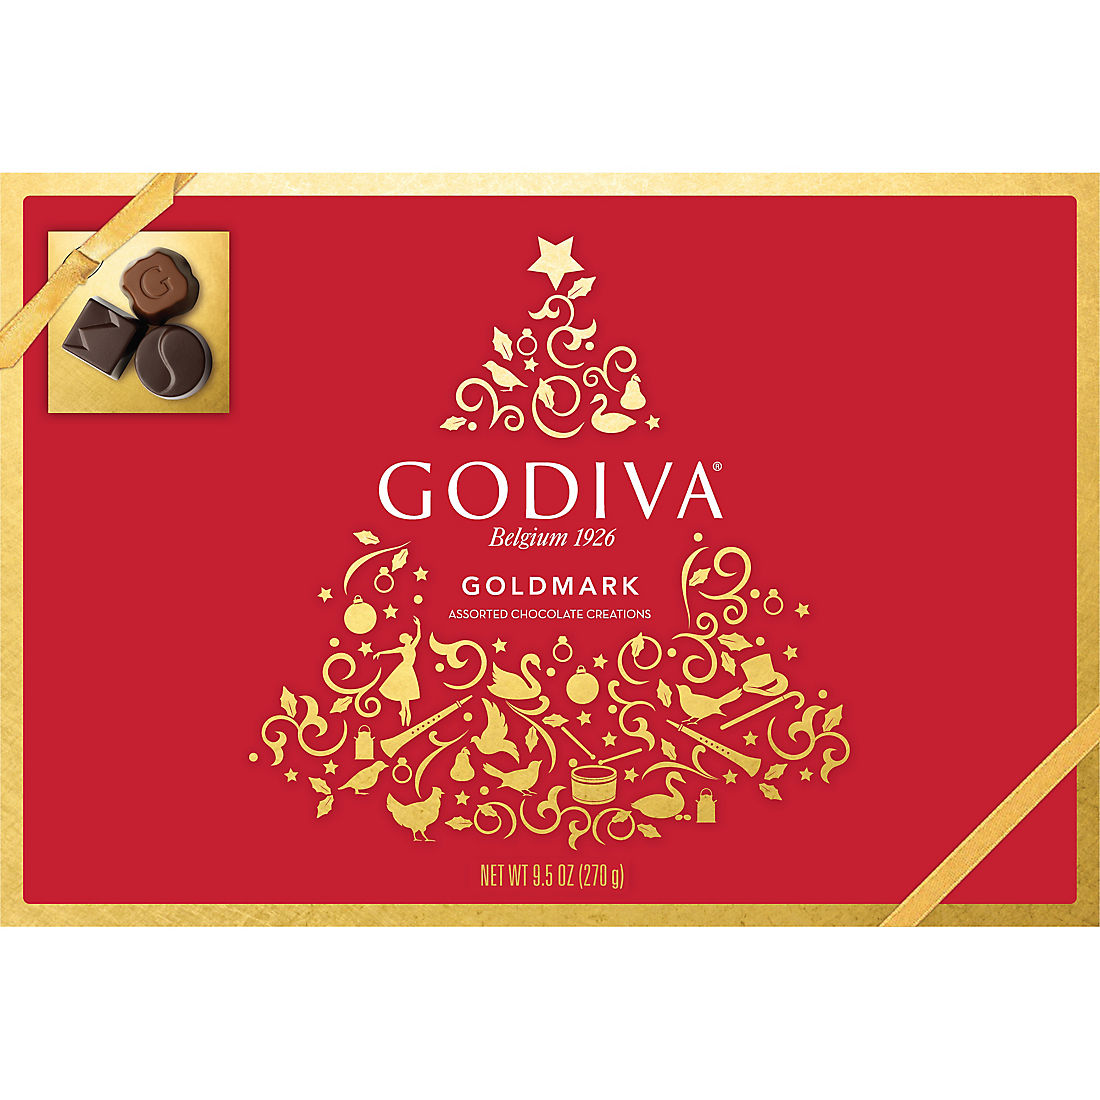 Fast shipping!! Godiva Masterpiece Holiday 12 Days of Godiva Box